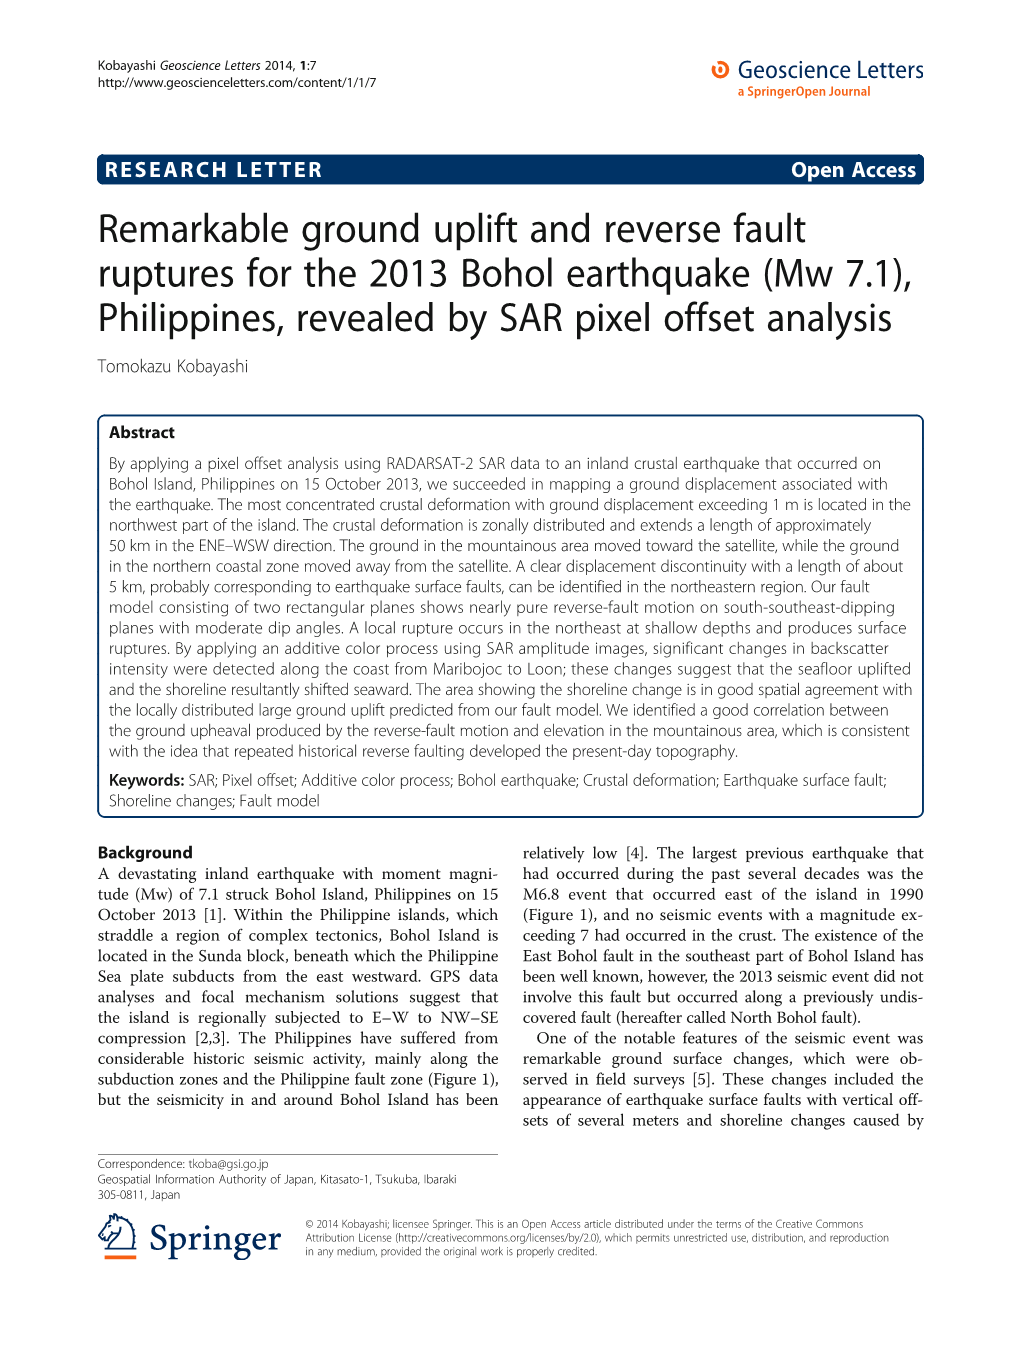 Remarkable Ground Uplift and Reverse Fault Ruptures for the 2013 Bohol Earthquake (Mw 7.1), Philippines, Revealed by SAR Pixel Offset Analysis Tomokazu Kobayashi